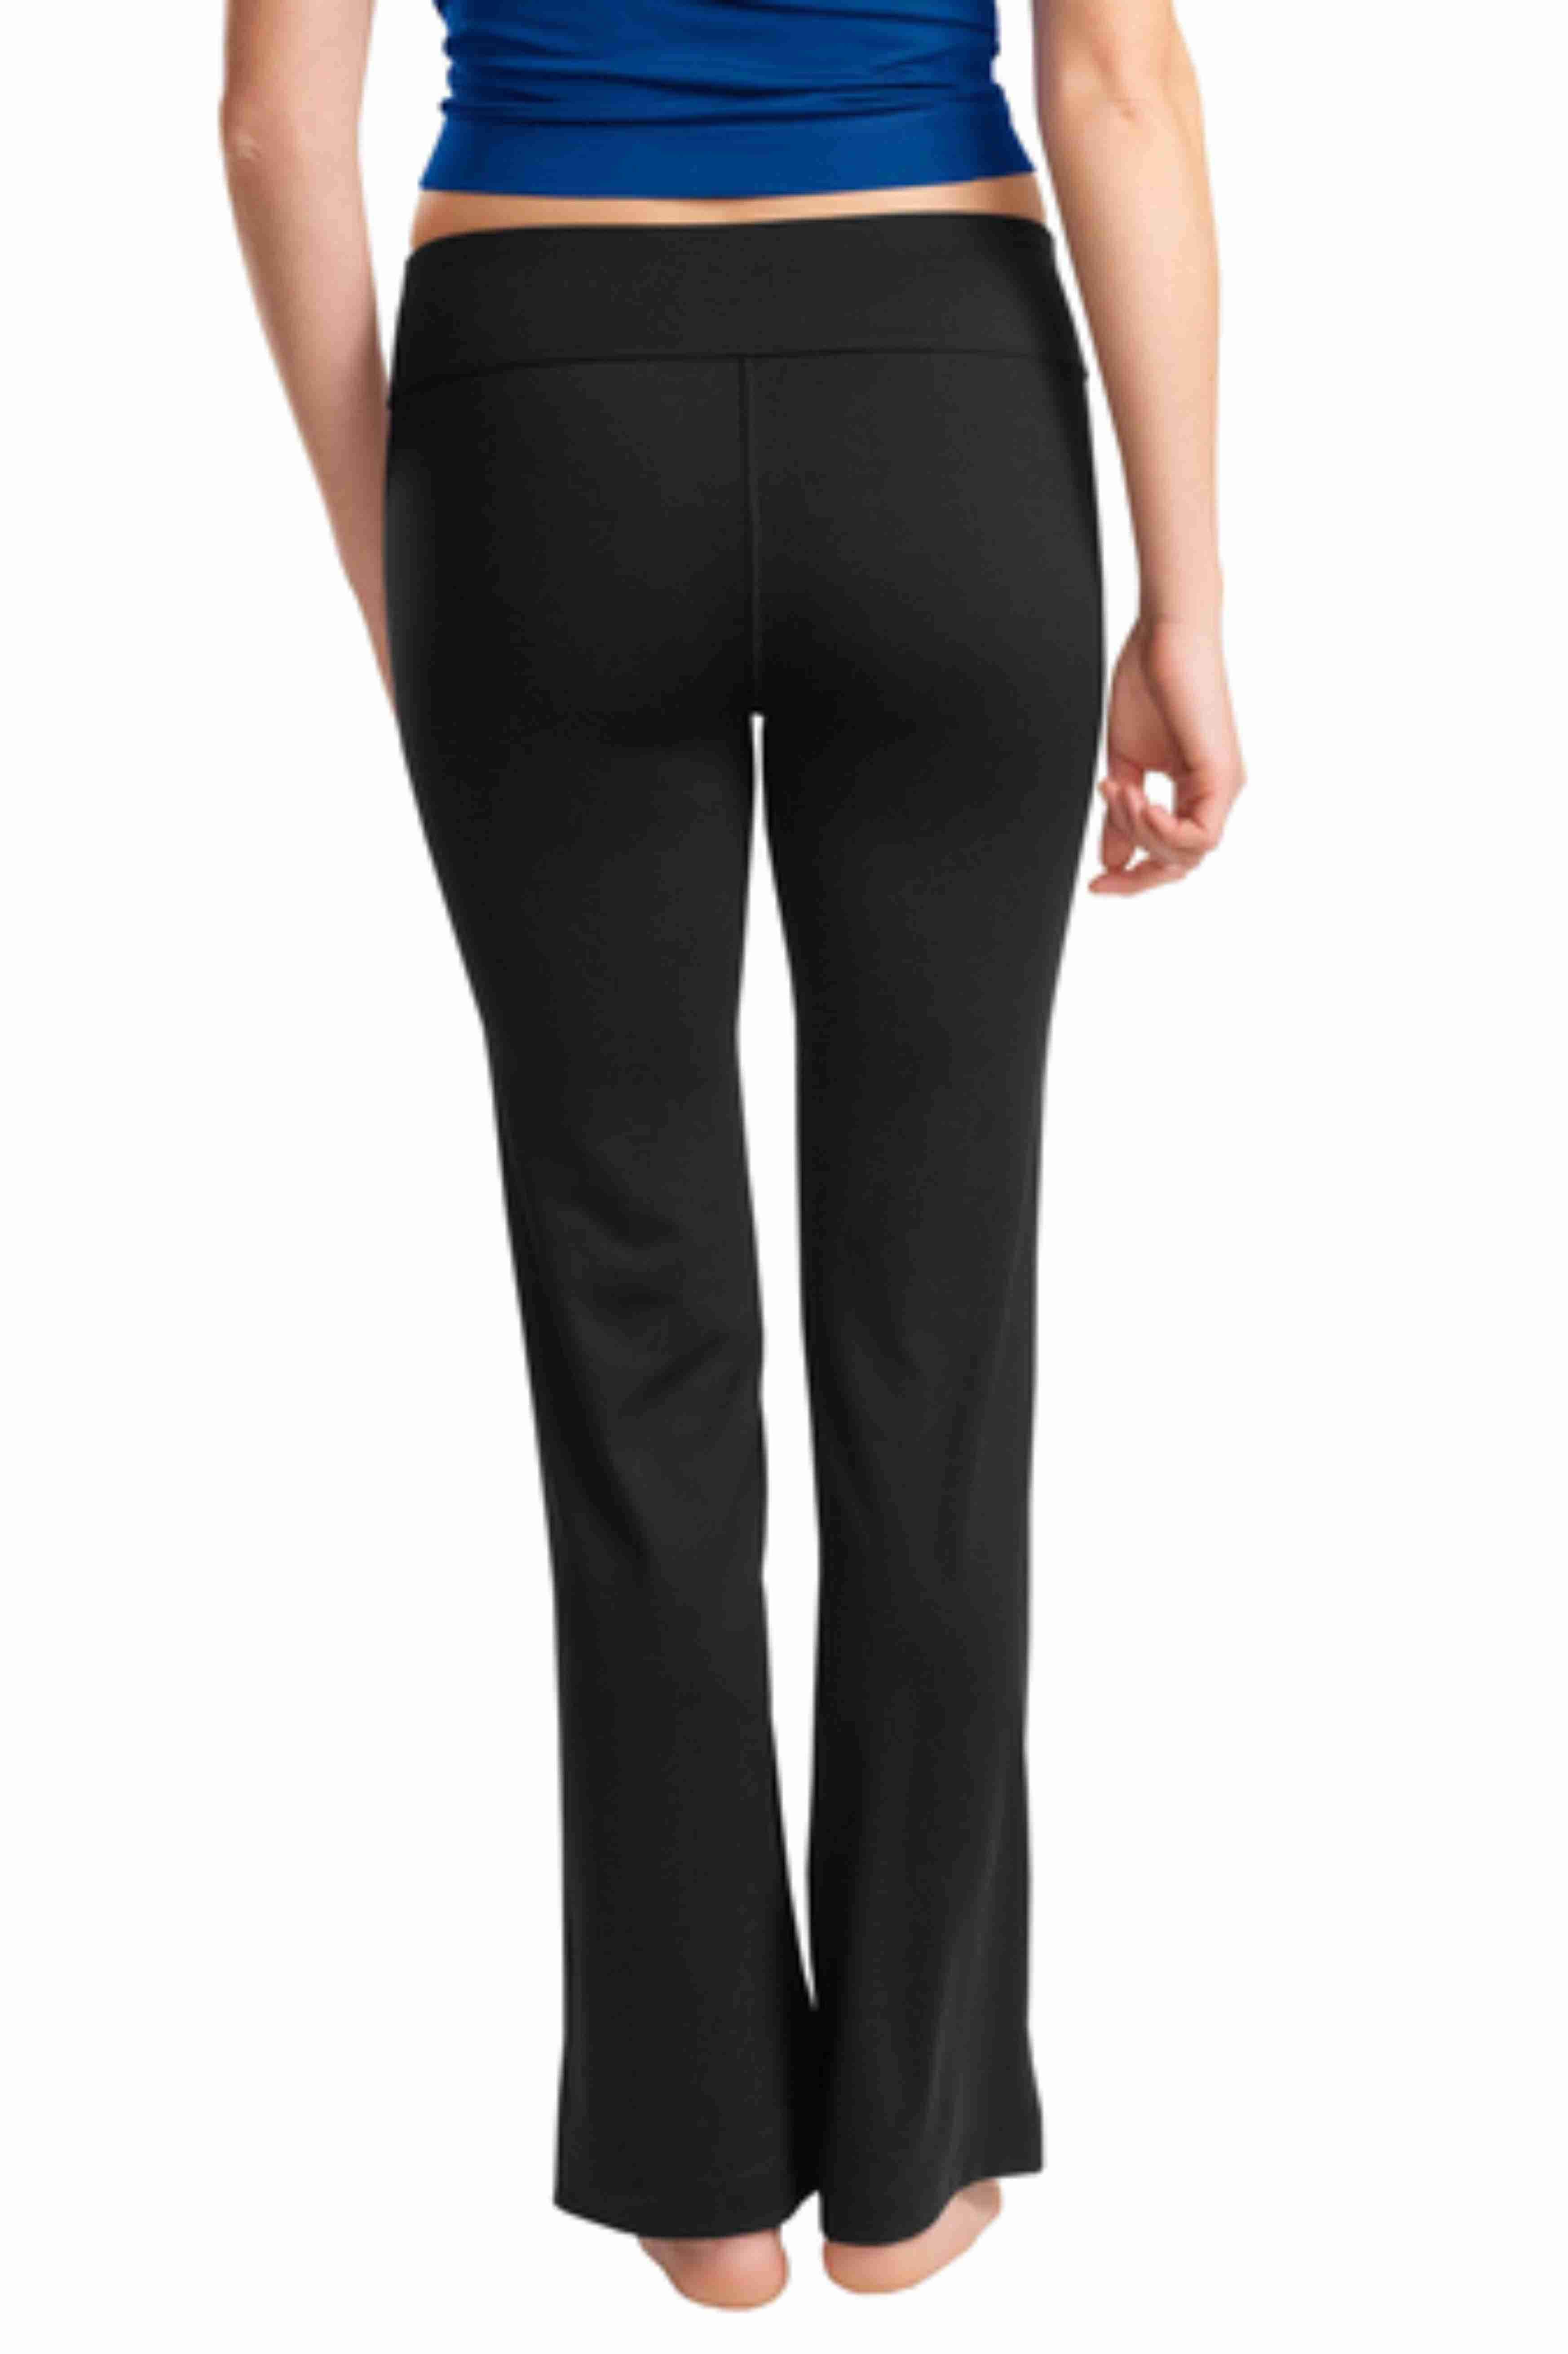 Brite Star Twirlers- Yoga Pants Yoga Pants Beckys-Boutique.com 